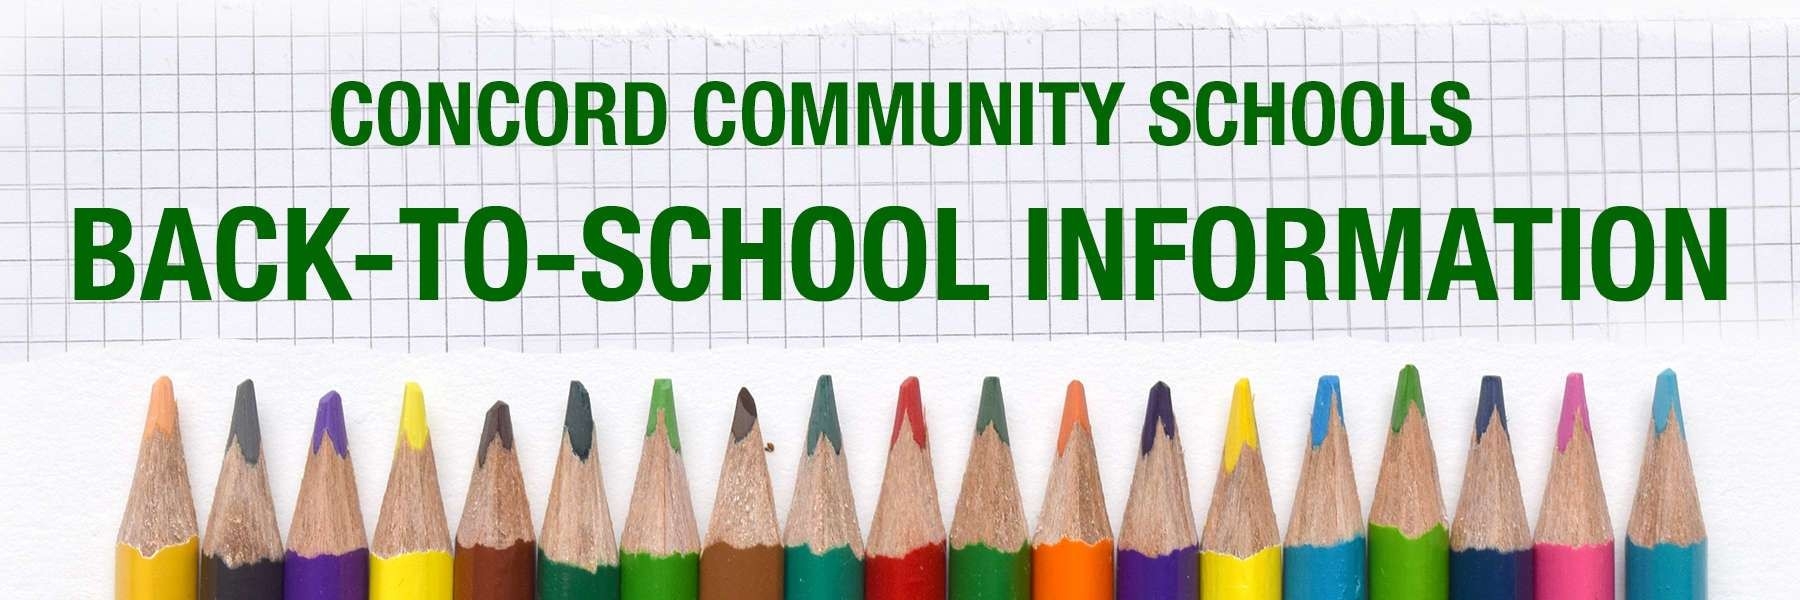 Back-To-School Information 2019-2020 - Concord Community Schools  Grade R Back Pay 2020